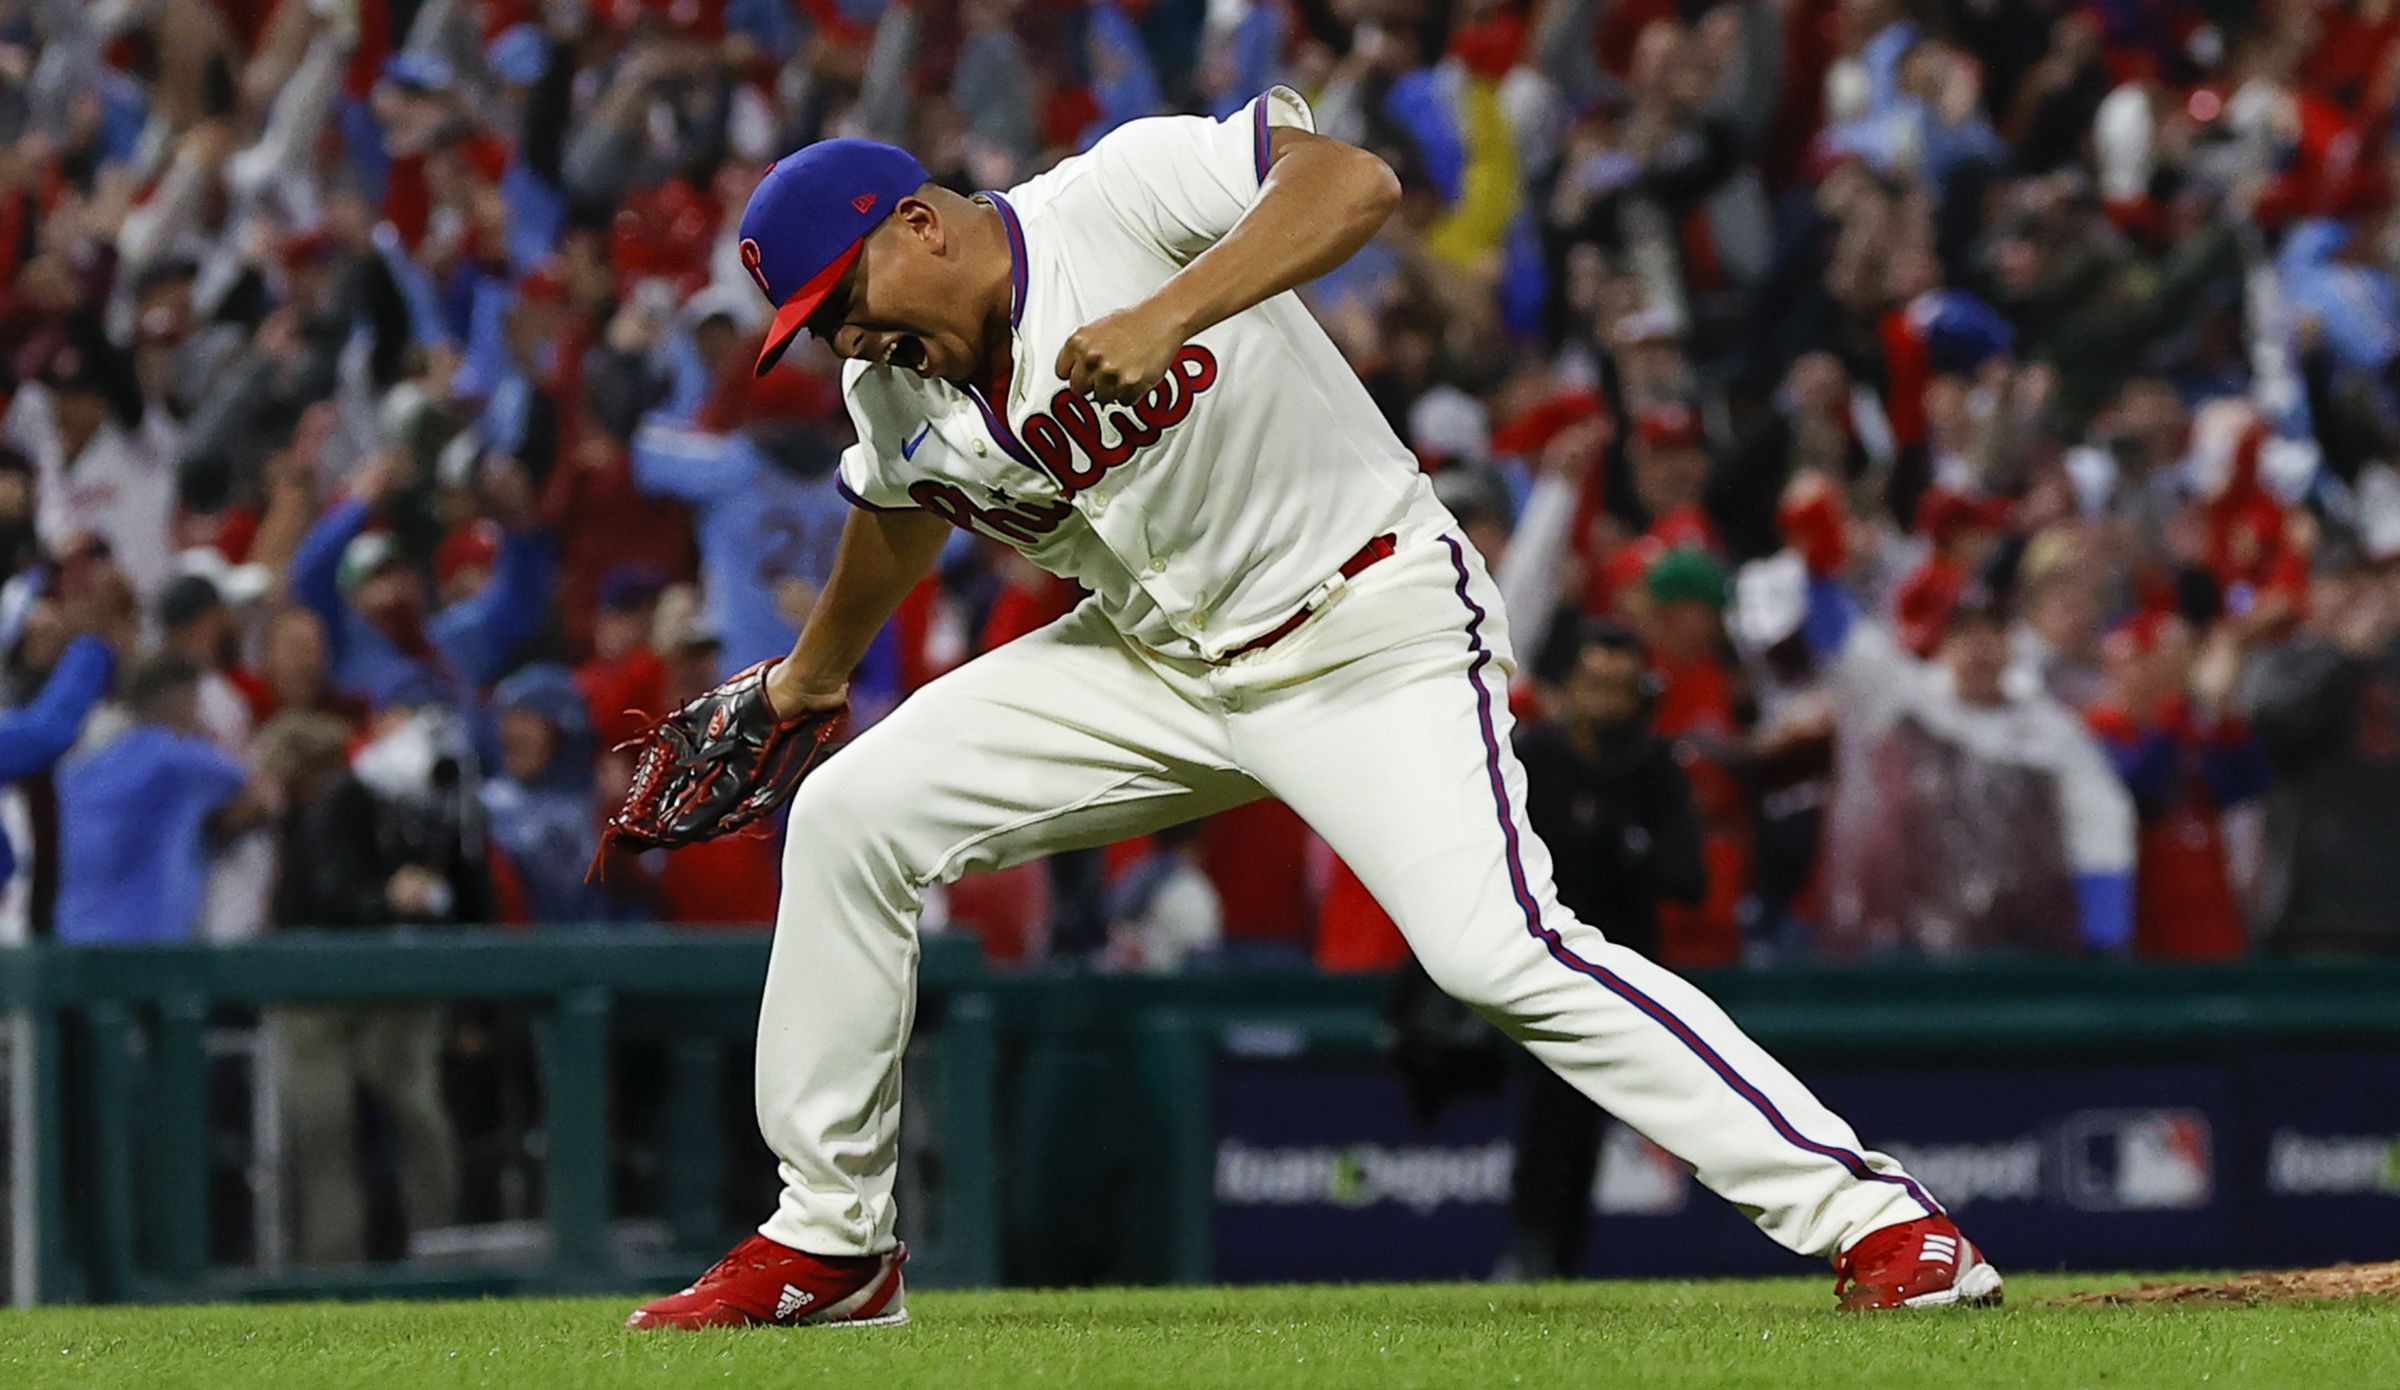 Ranger Suárez injury setback causes Phillies rotation issues